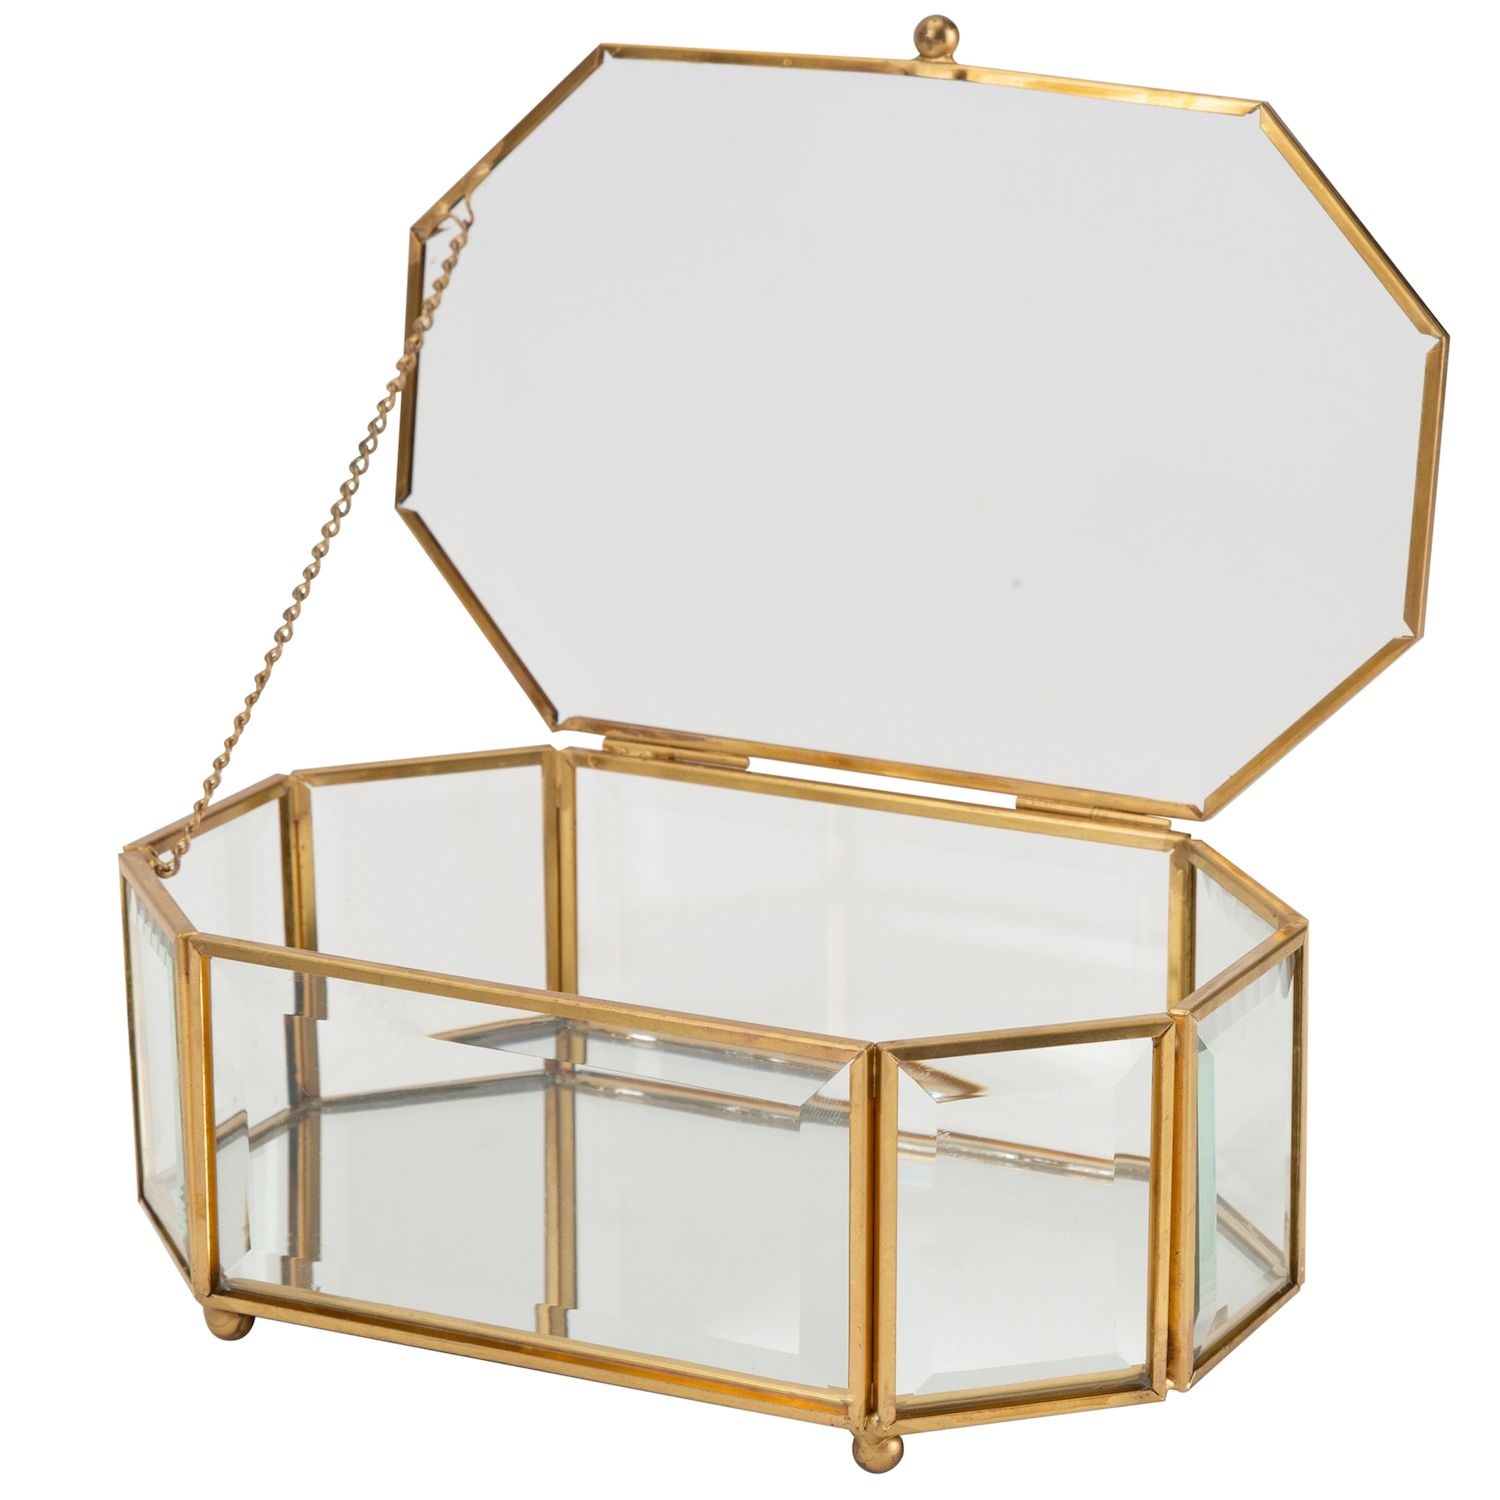 Image for Home Details Vintage Mirrored Bottom Octagonal Glass Keepsake Box at Kohl's.